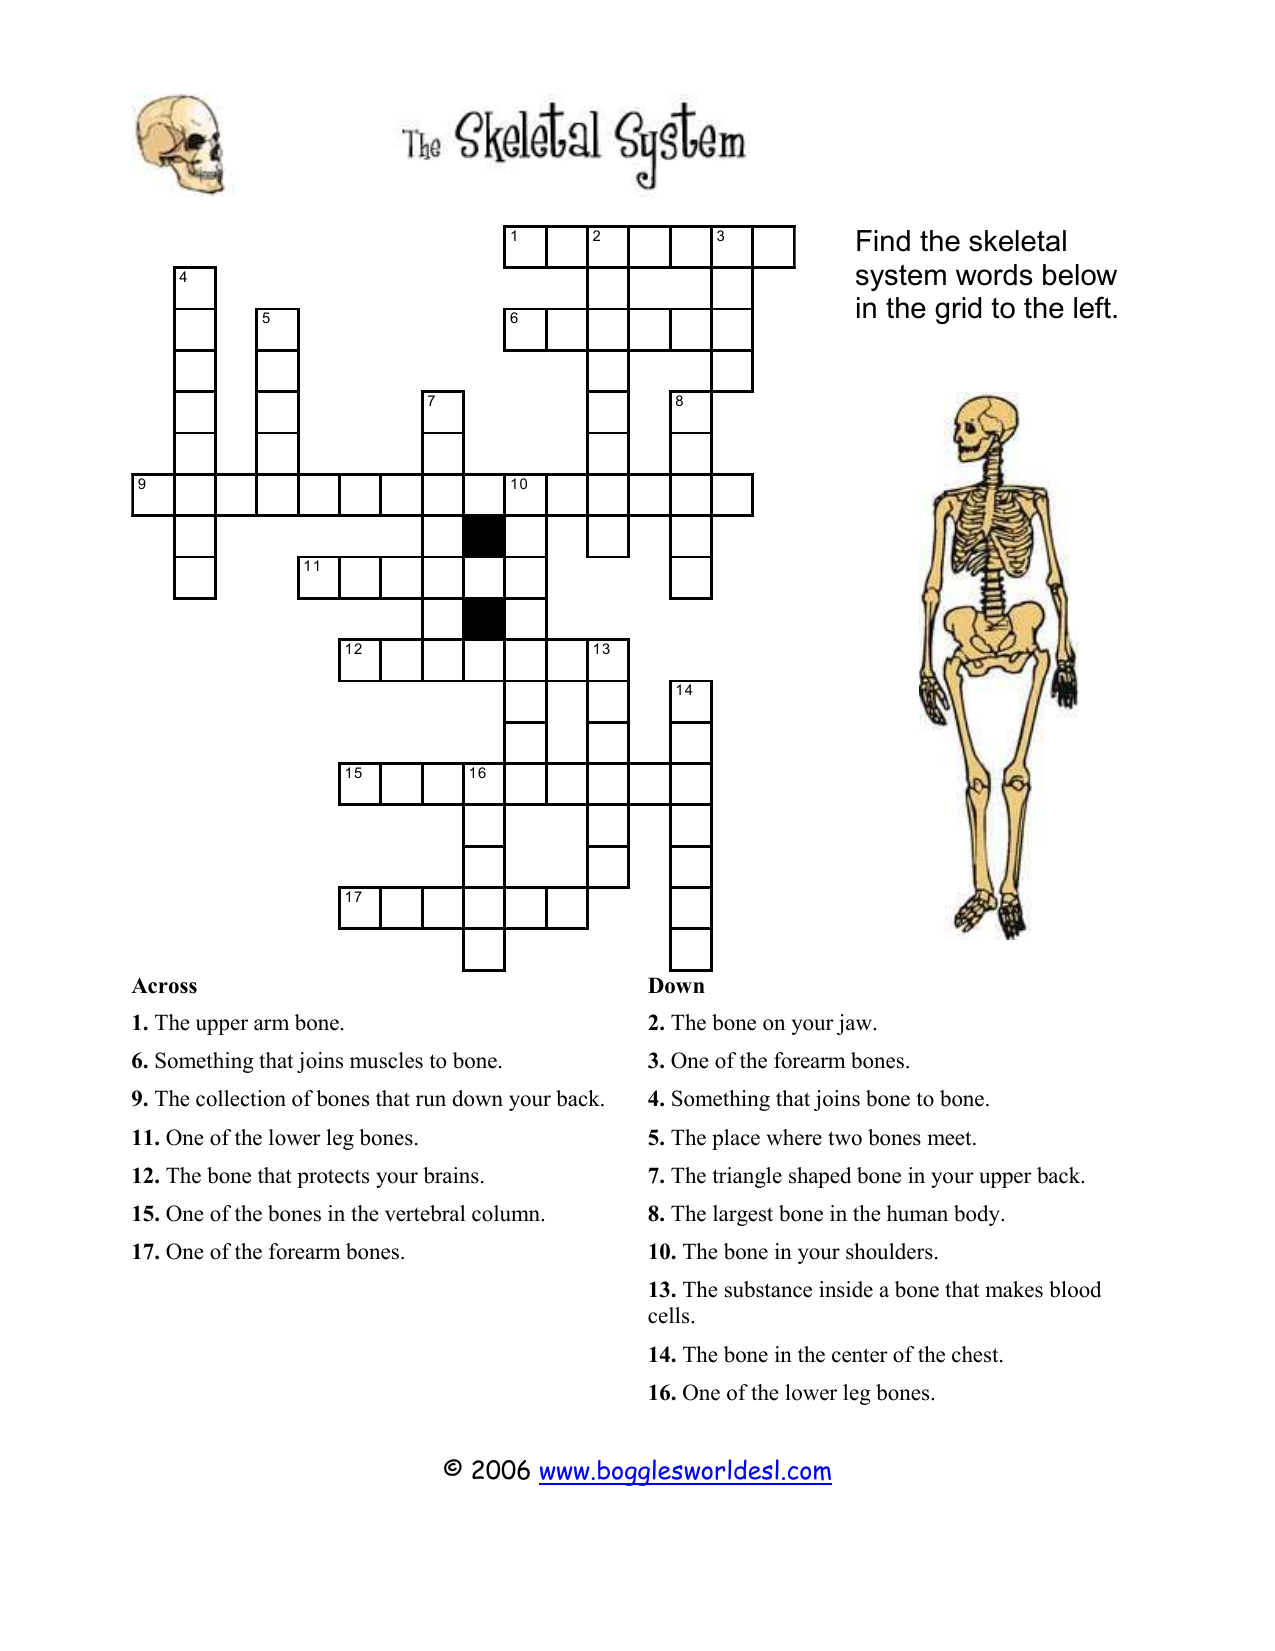 skeletalsystem crossword2